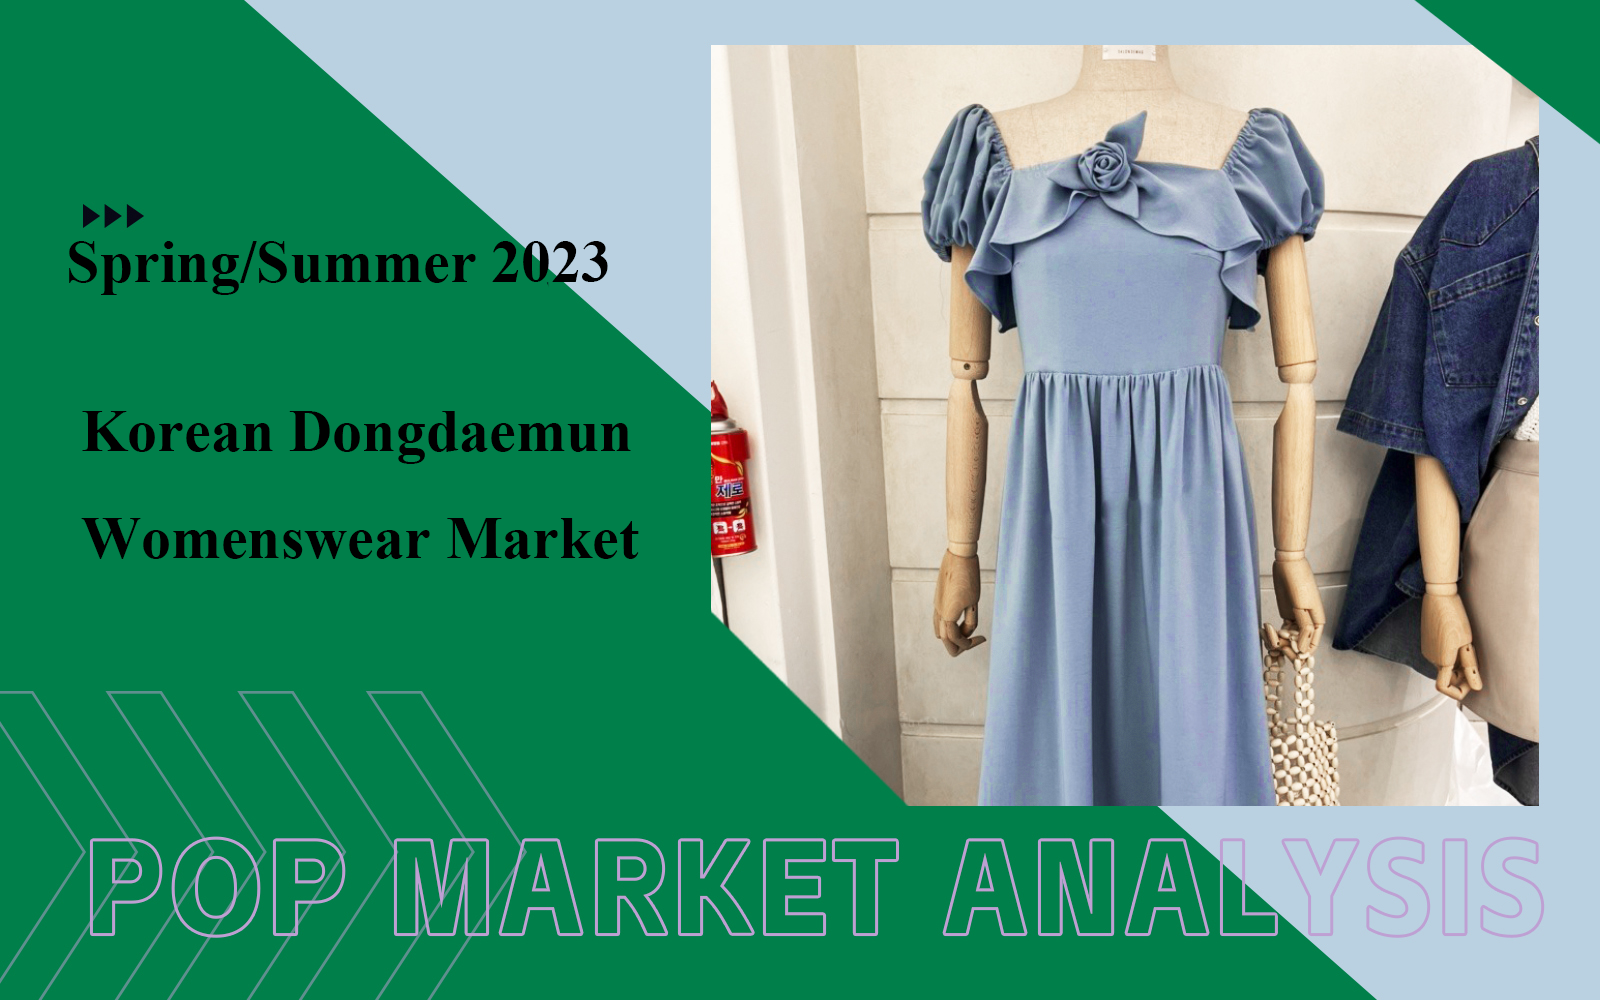 June 2023 -- The Womenswear Market Analysis of Korean Dongdaemum